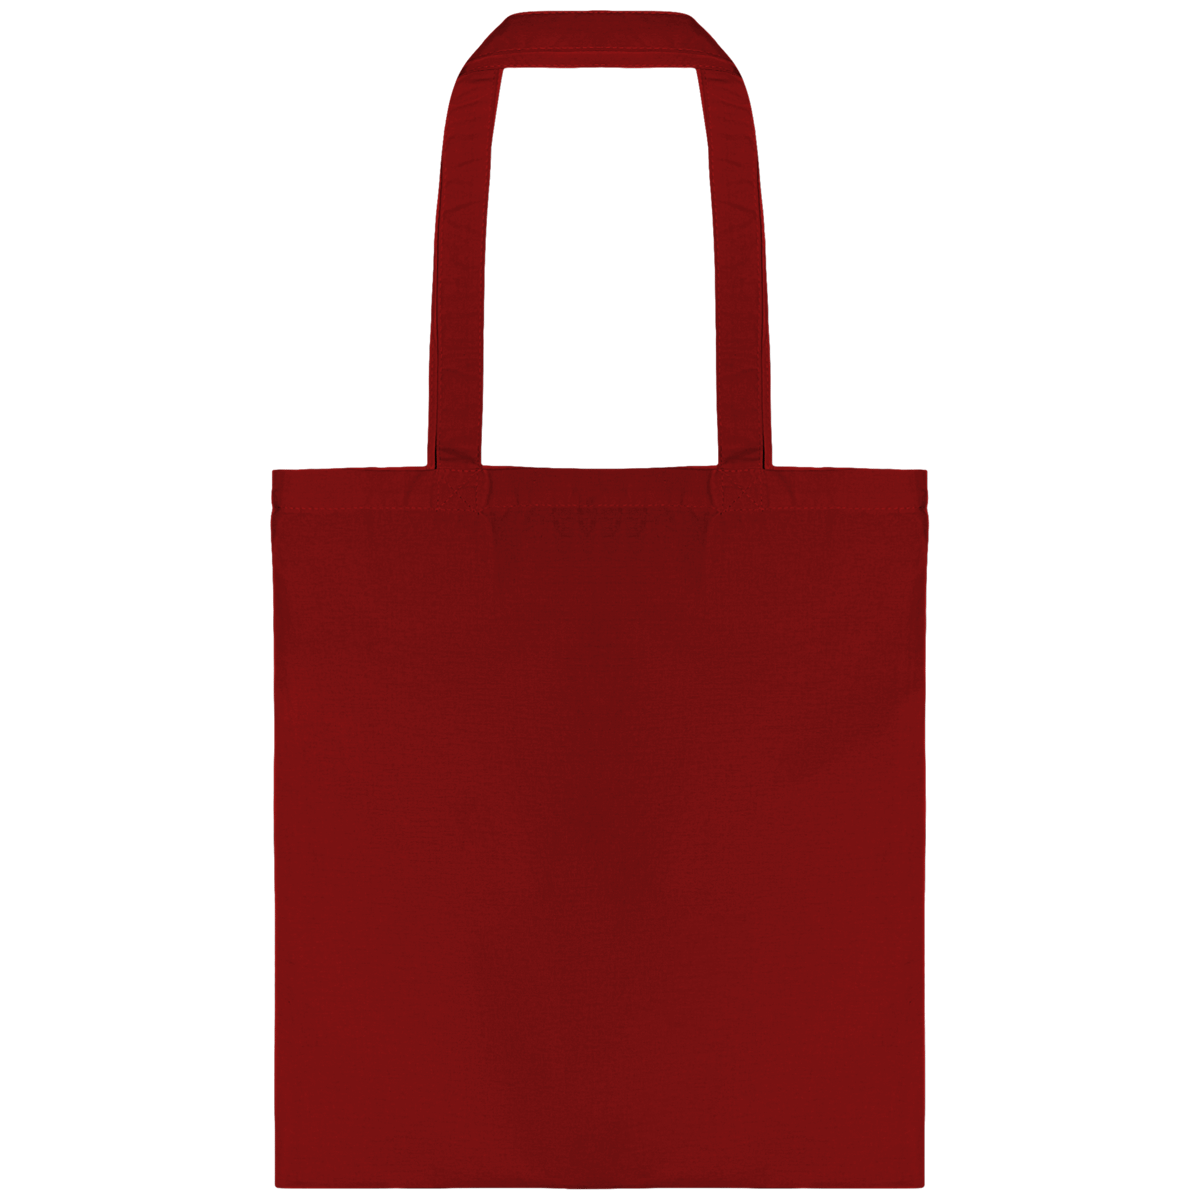 Personnalisez Votre Tote Bag Avec Tunetoo Cherry Red